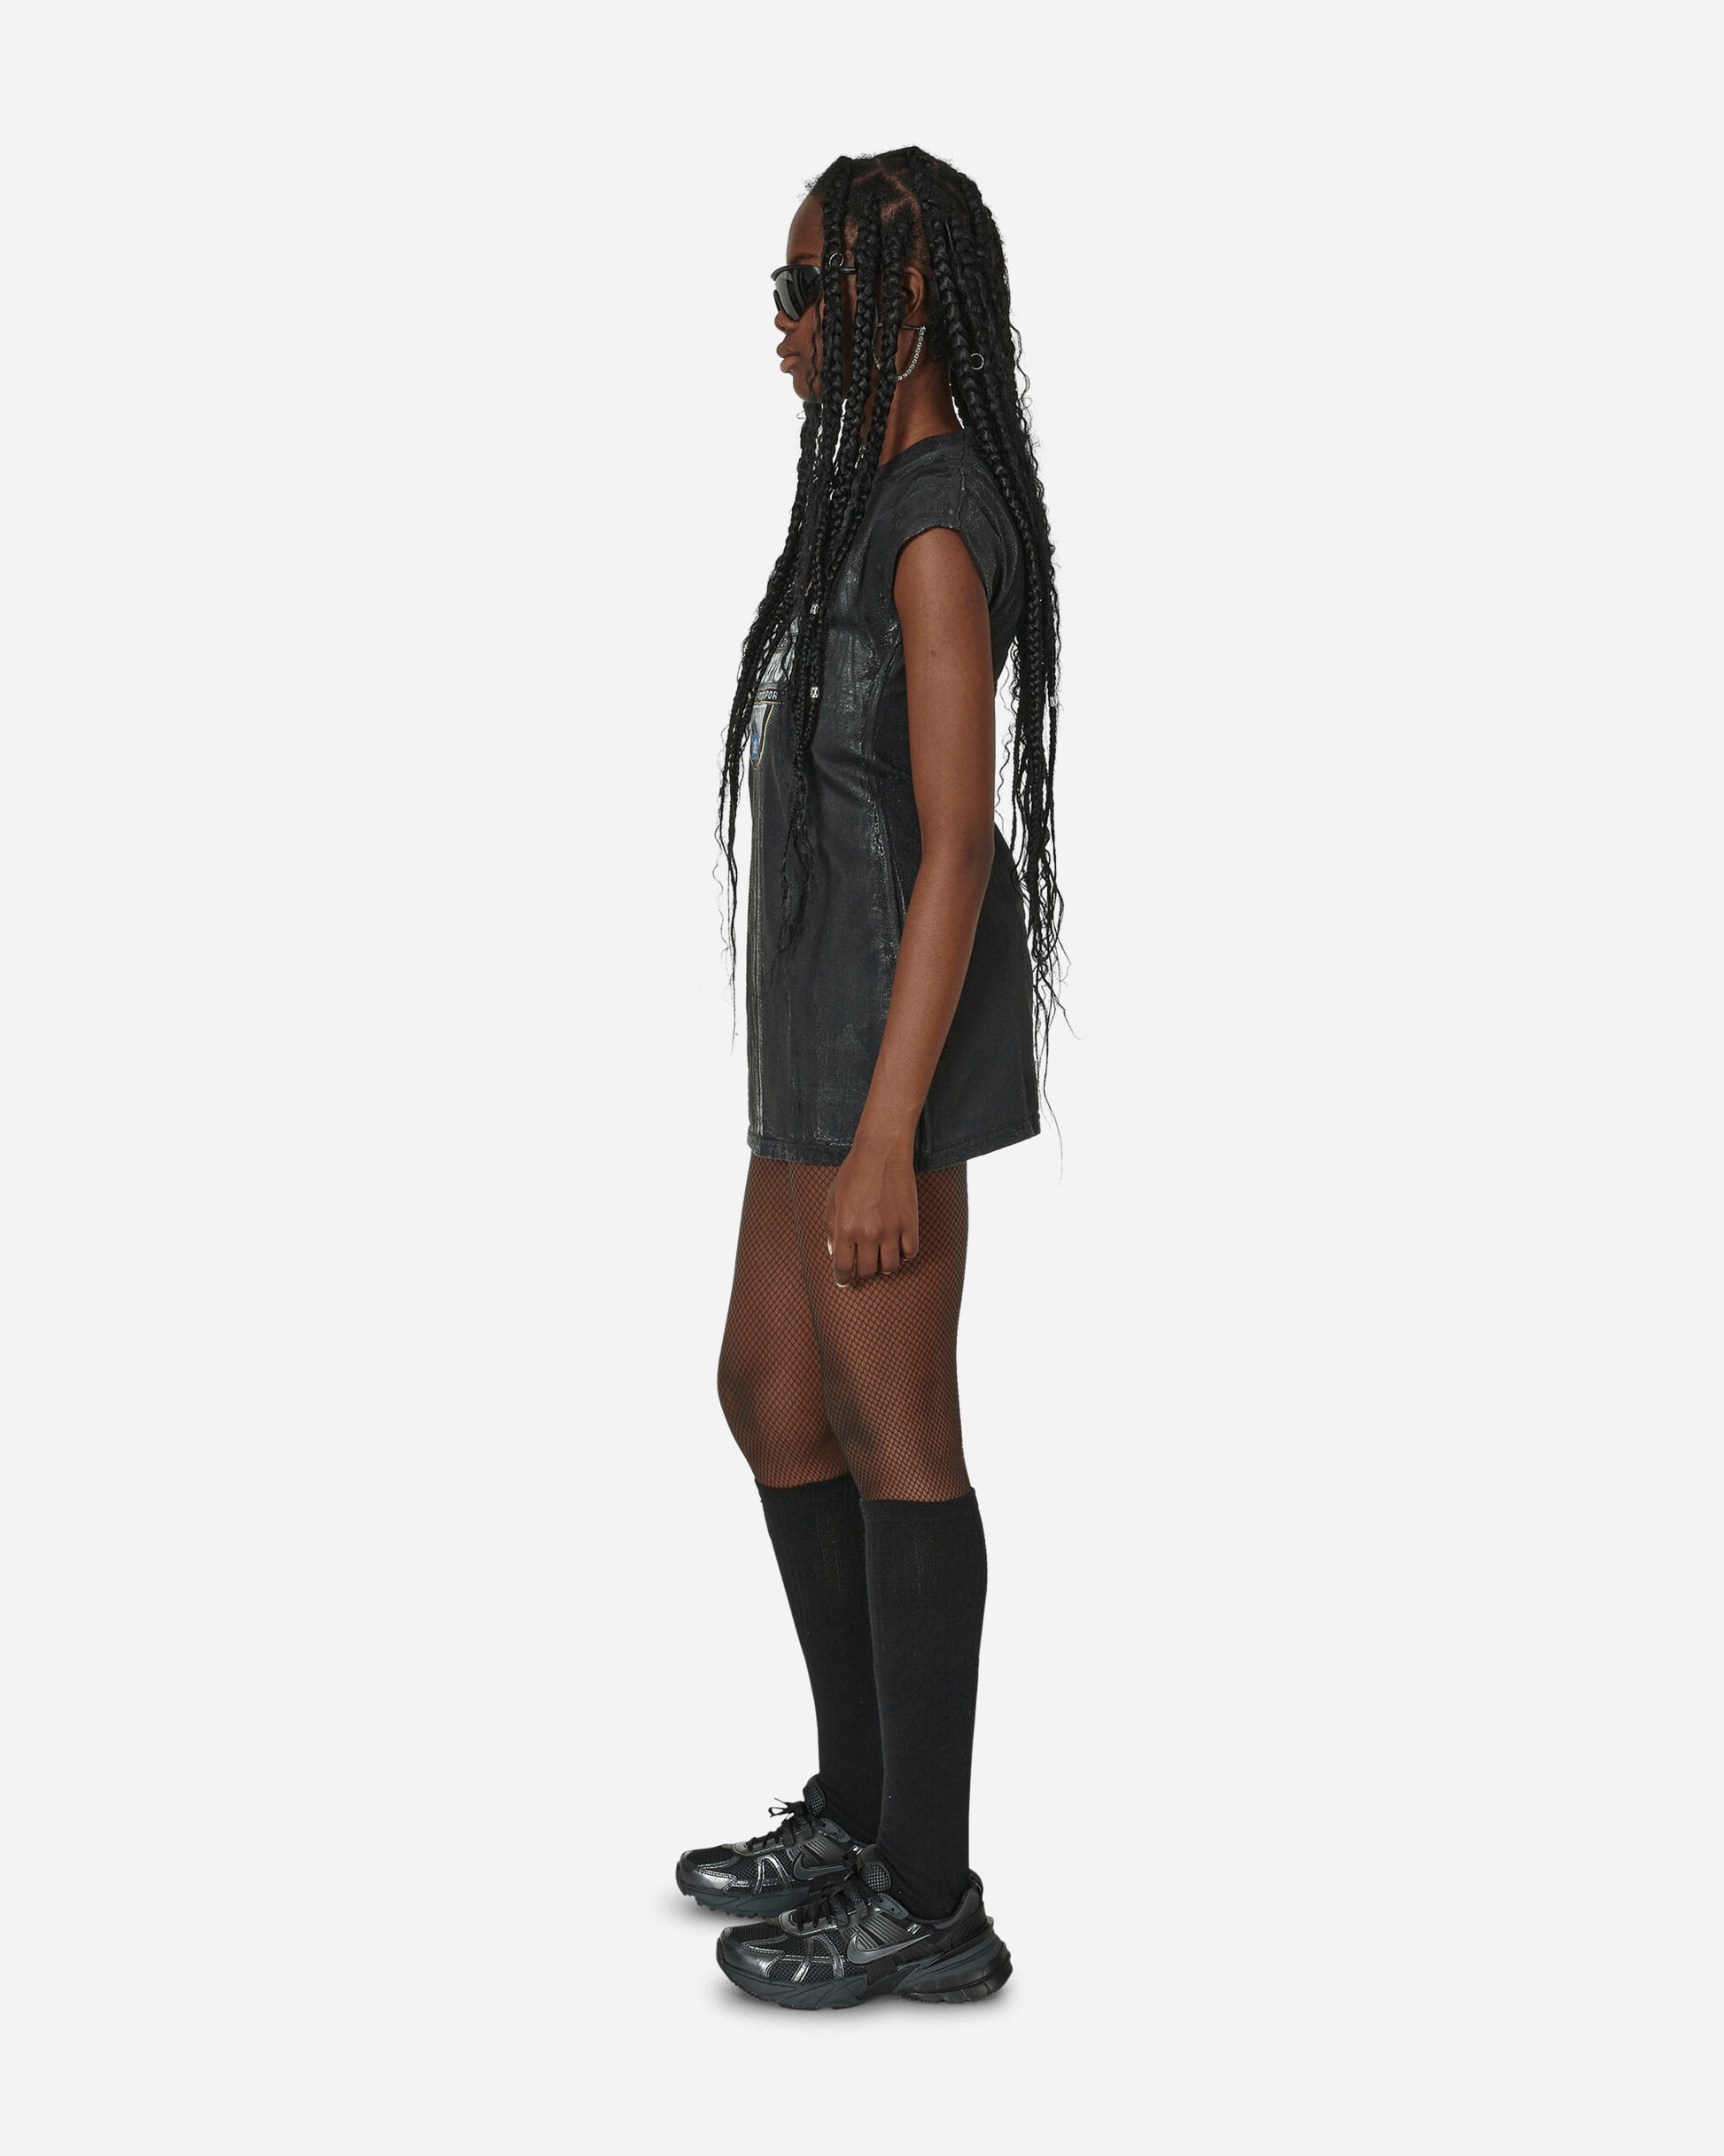 Prototypes Wmns Coated Mini Dress Printed Black/Print Dresses Dress Short PT05DR18WW BLACKPRINT